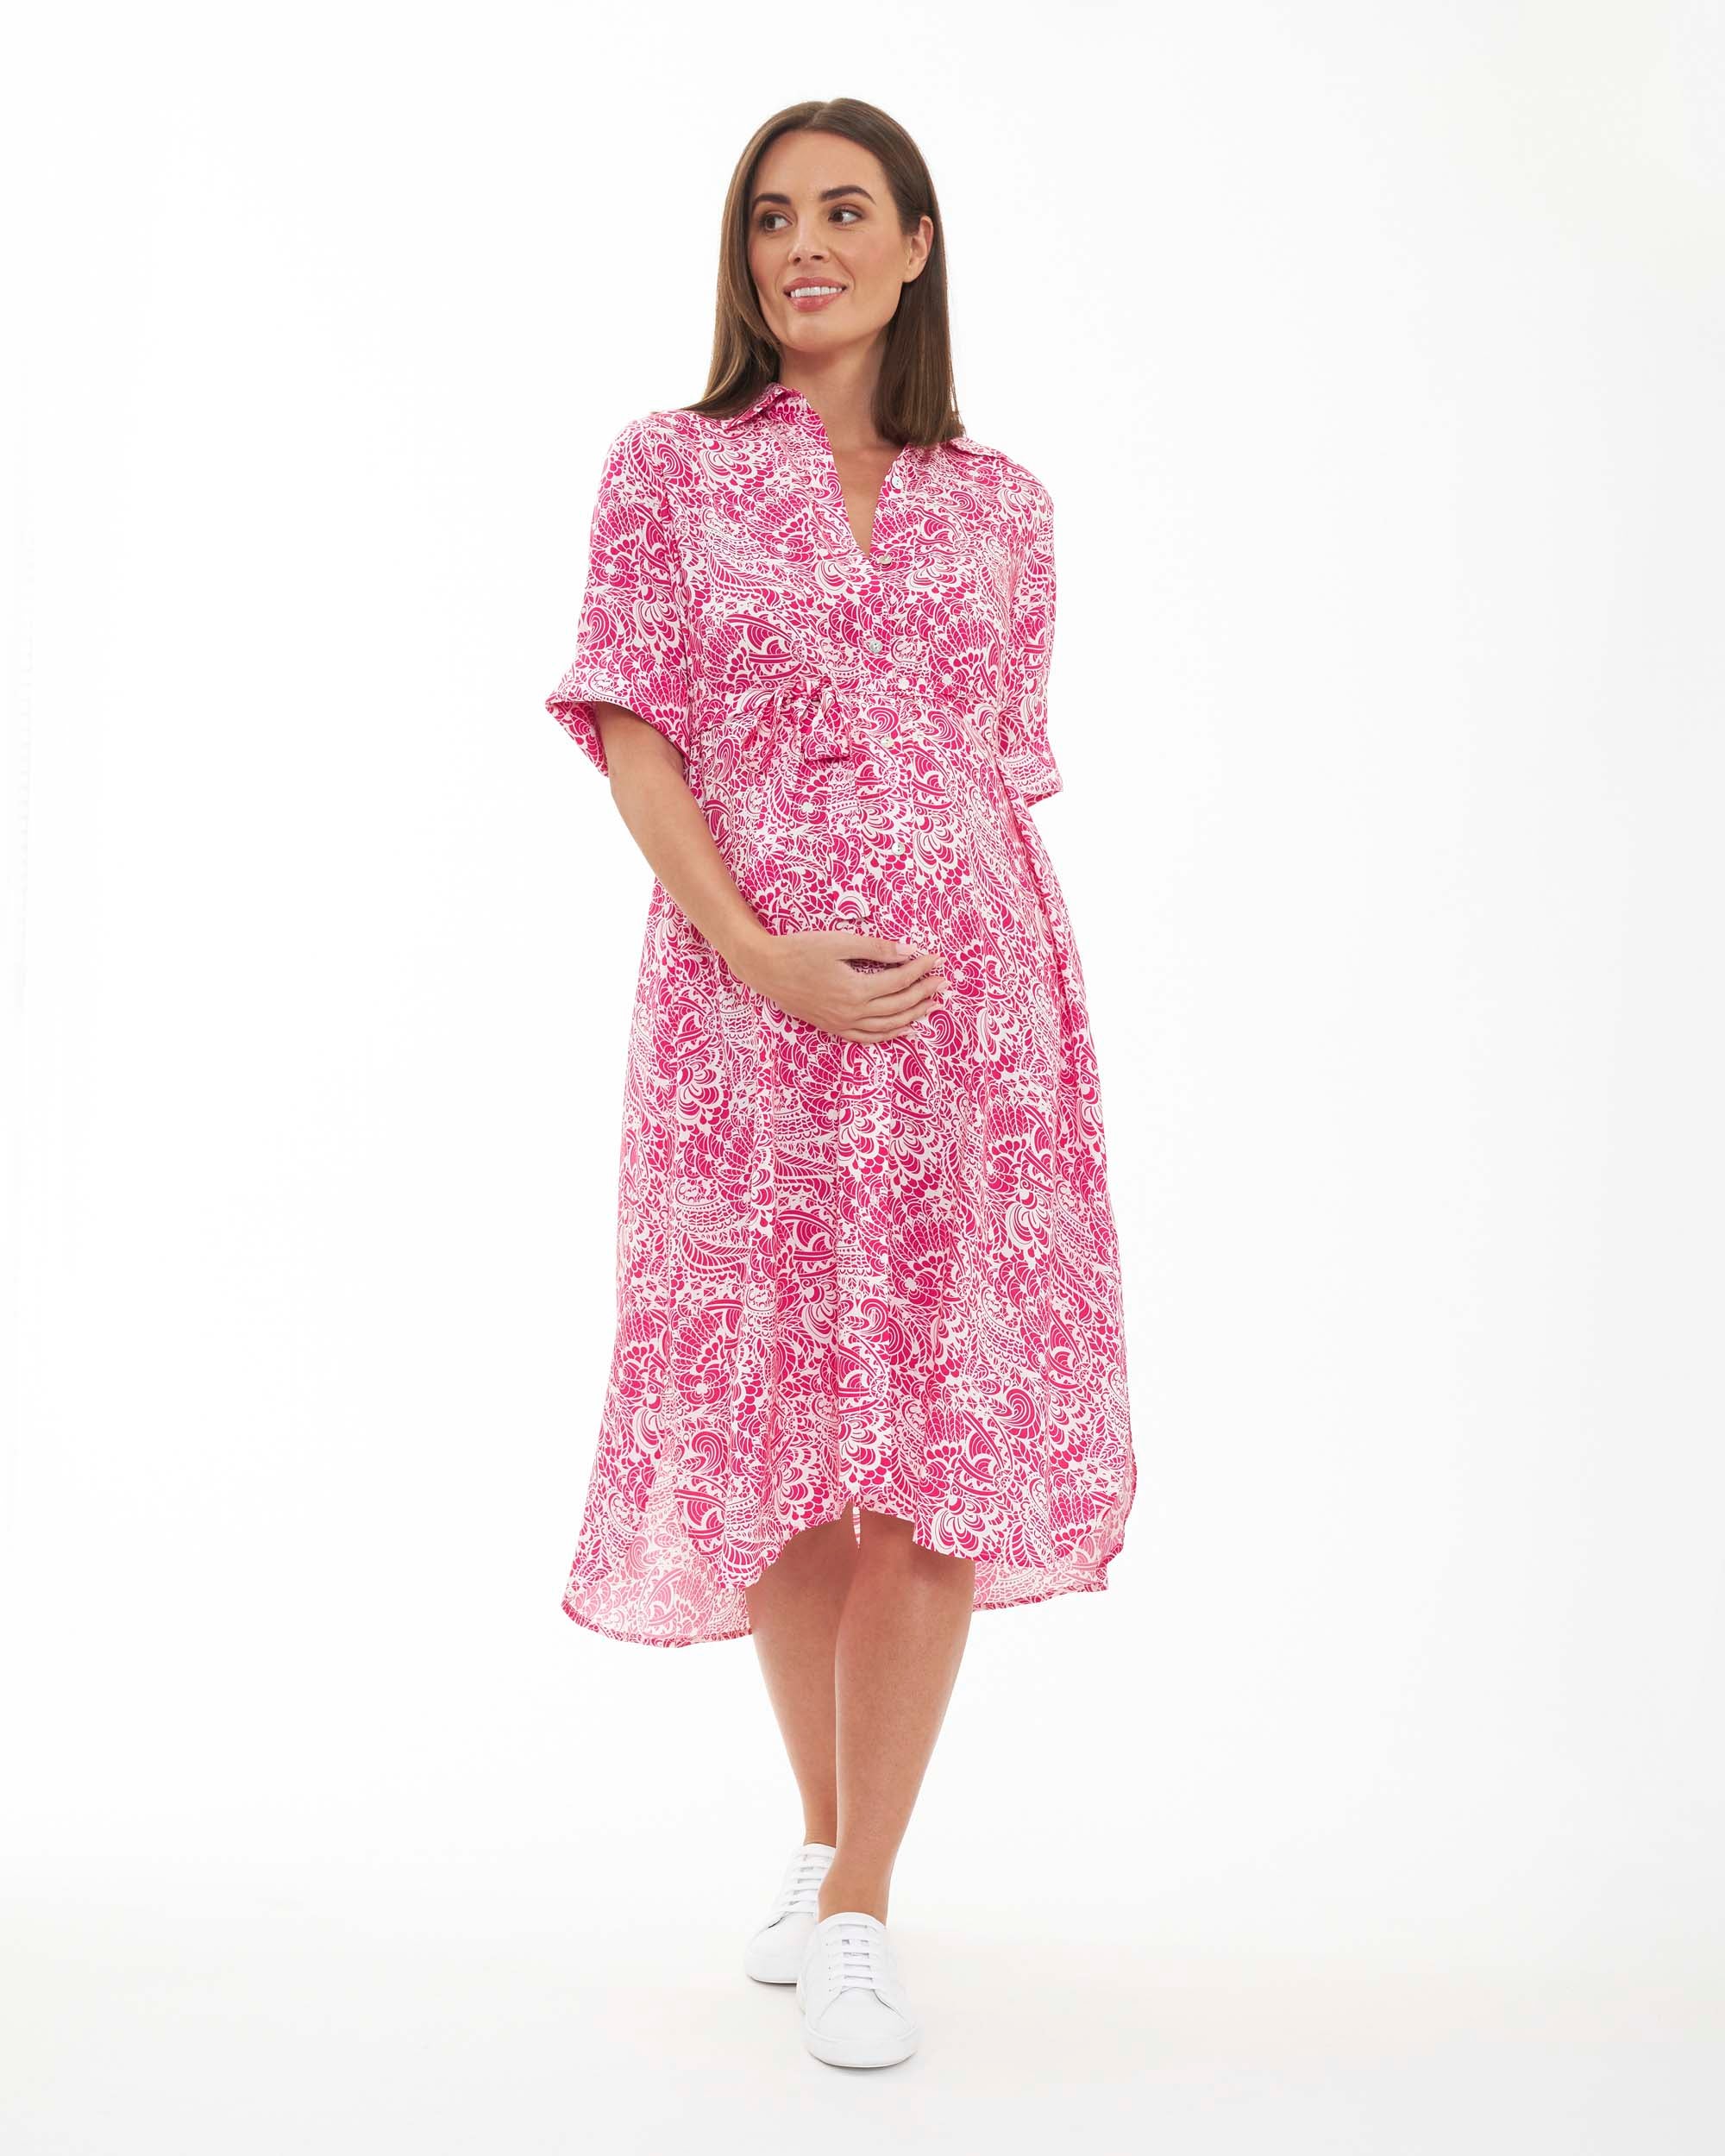 Ripe Maternity 'Janis' Shirt Dress